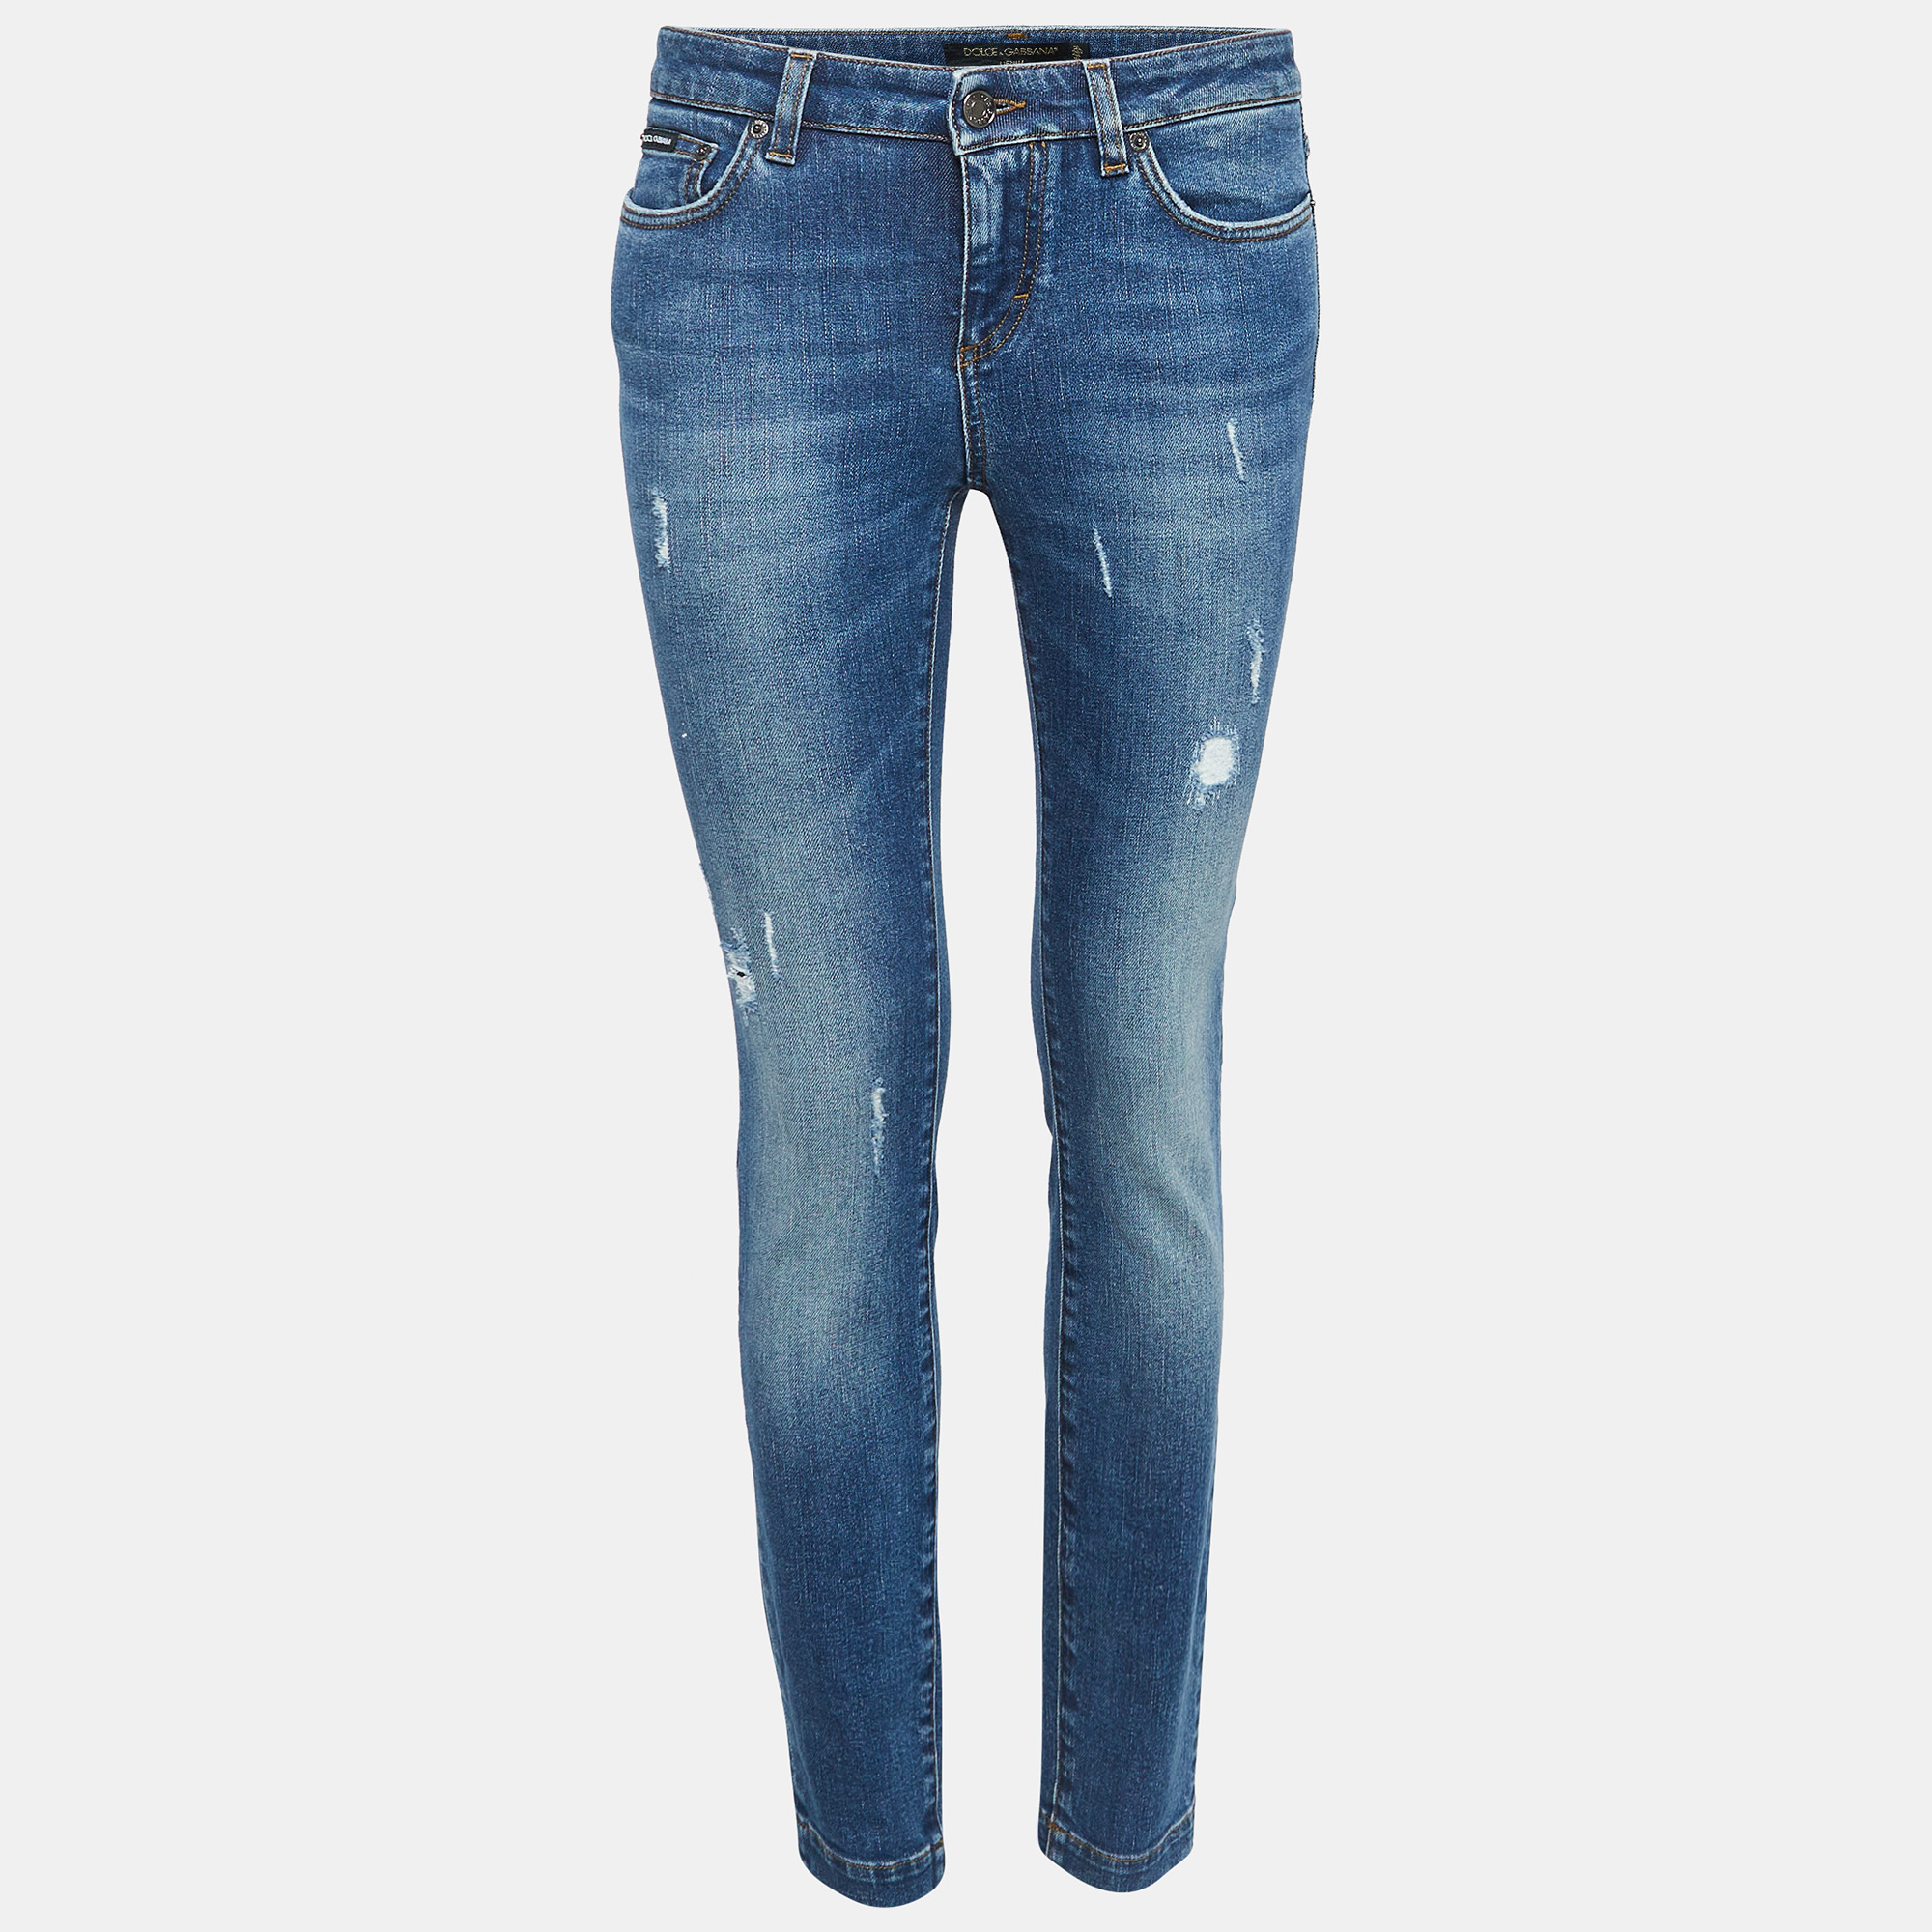 Pre-owned Dolce & Gabbana Blue Distressed Denim Jeans S Waist 28"